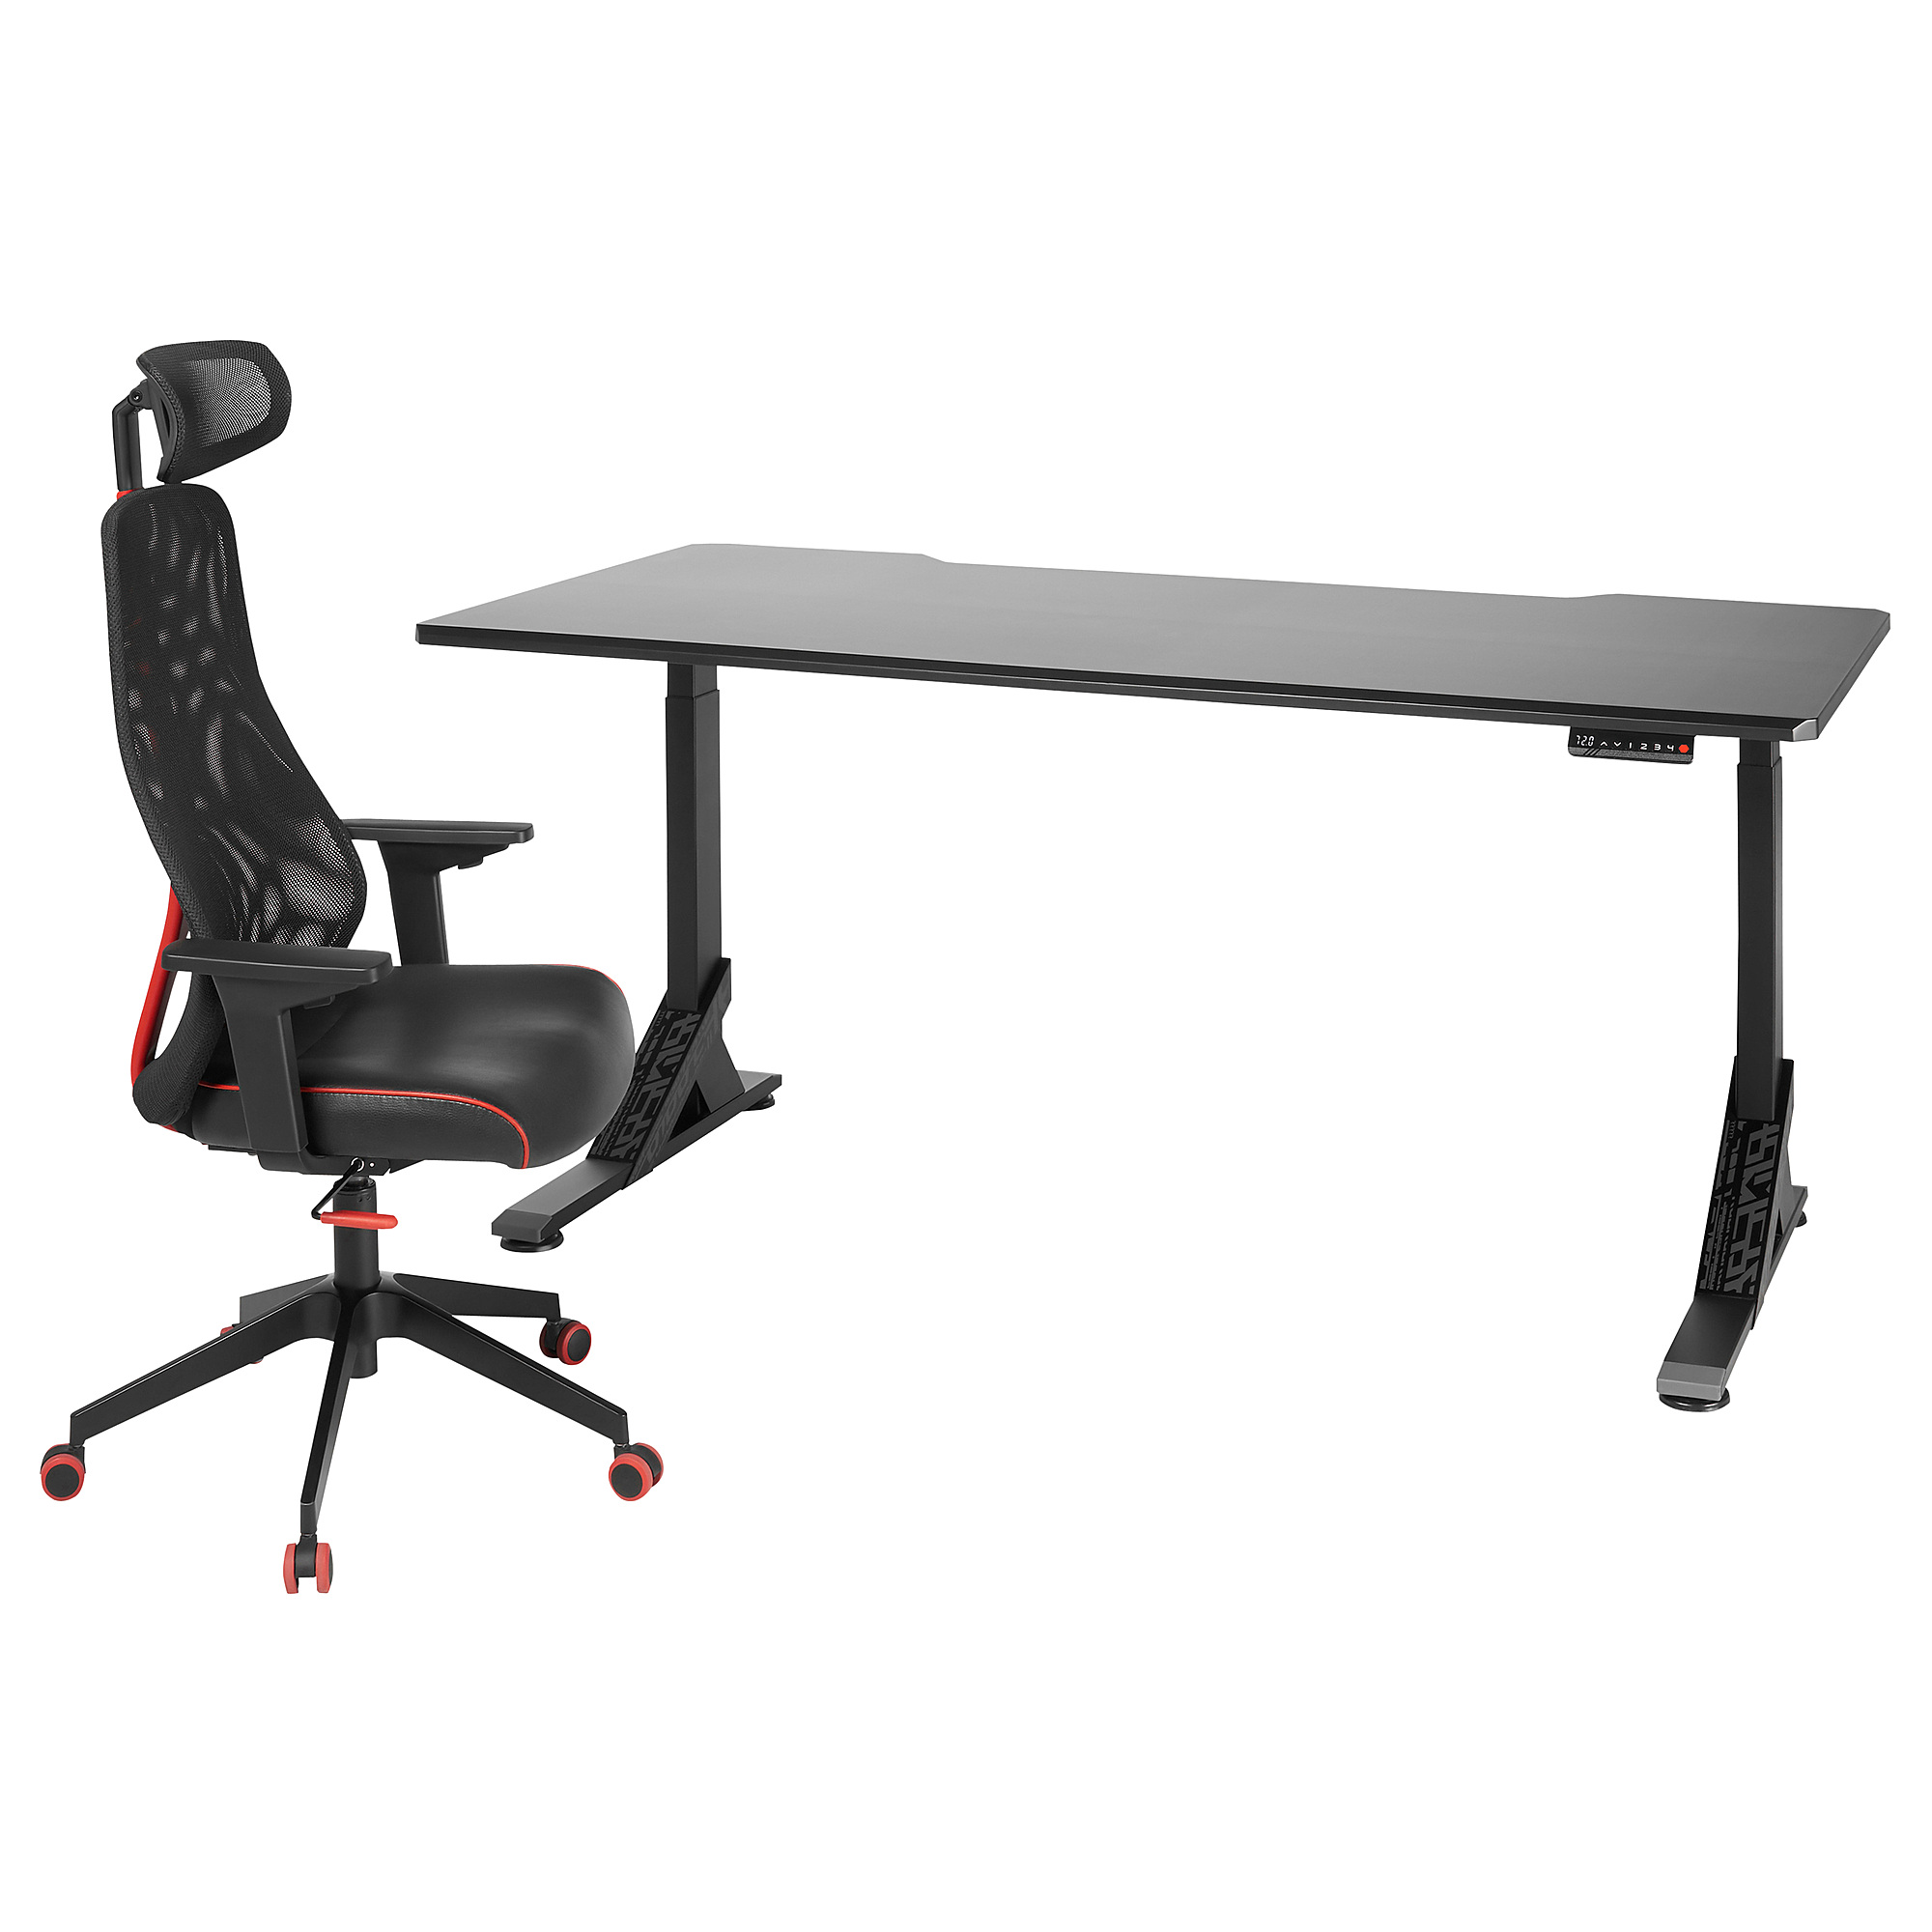 UPPSPEL/MATCHSPEL gaming desk and chair